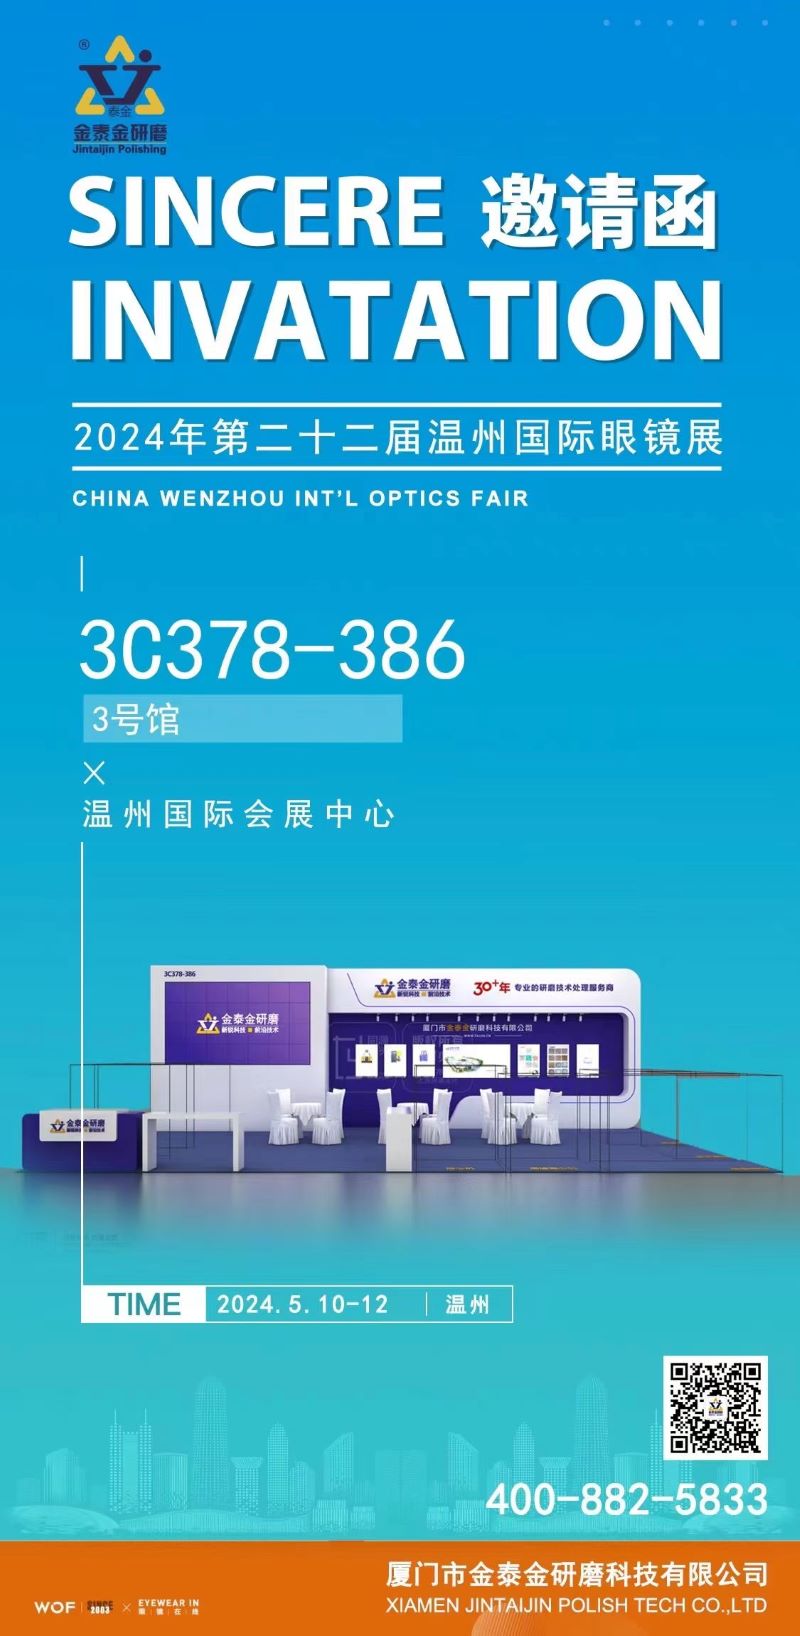 Jintaijin Polishing Technology Co. ประกาศเข้าร่วมในงาน Wenzhou International Optics Fair ปี 2024